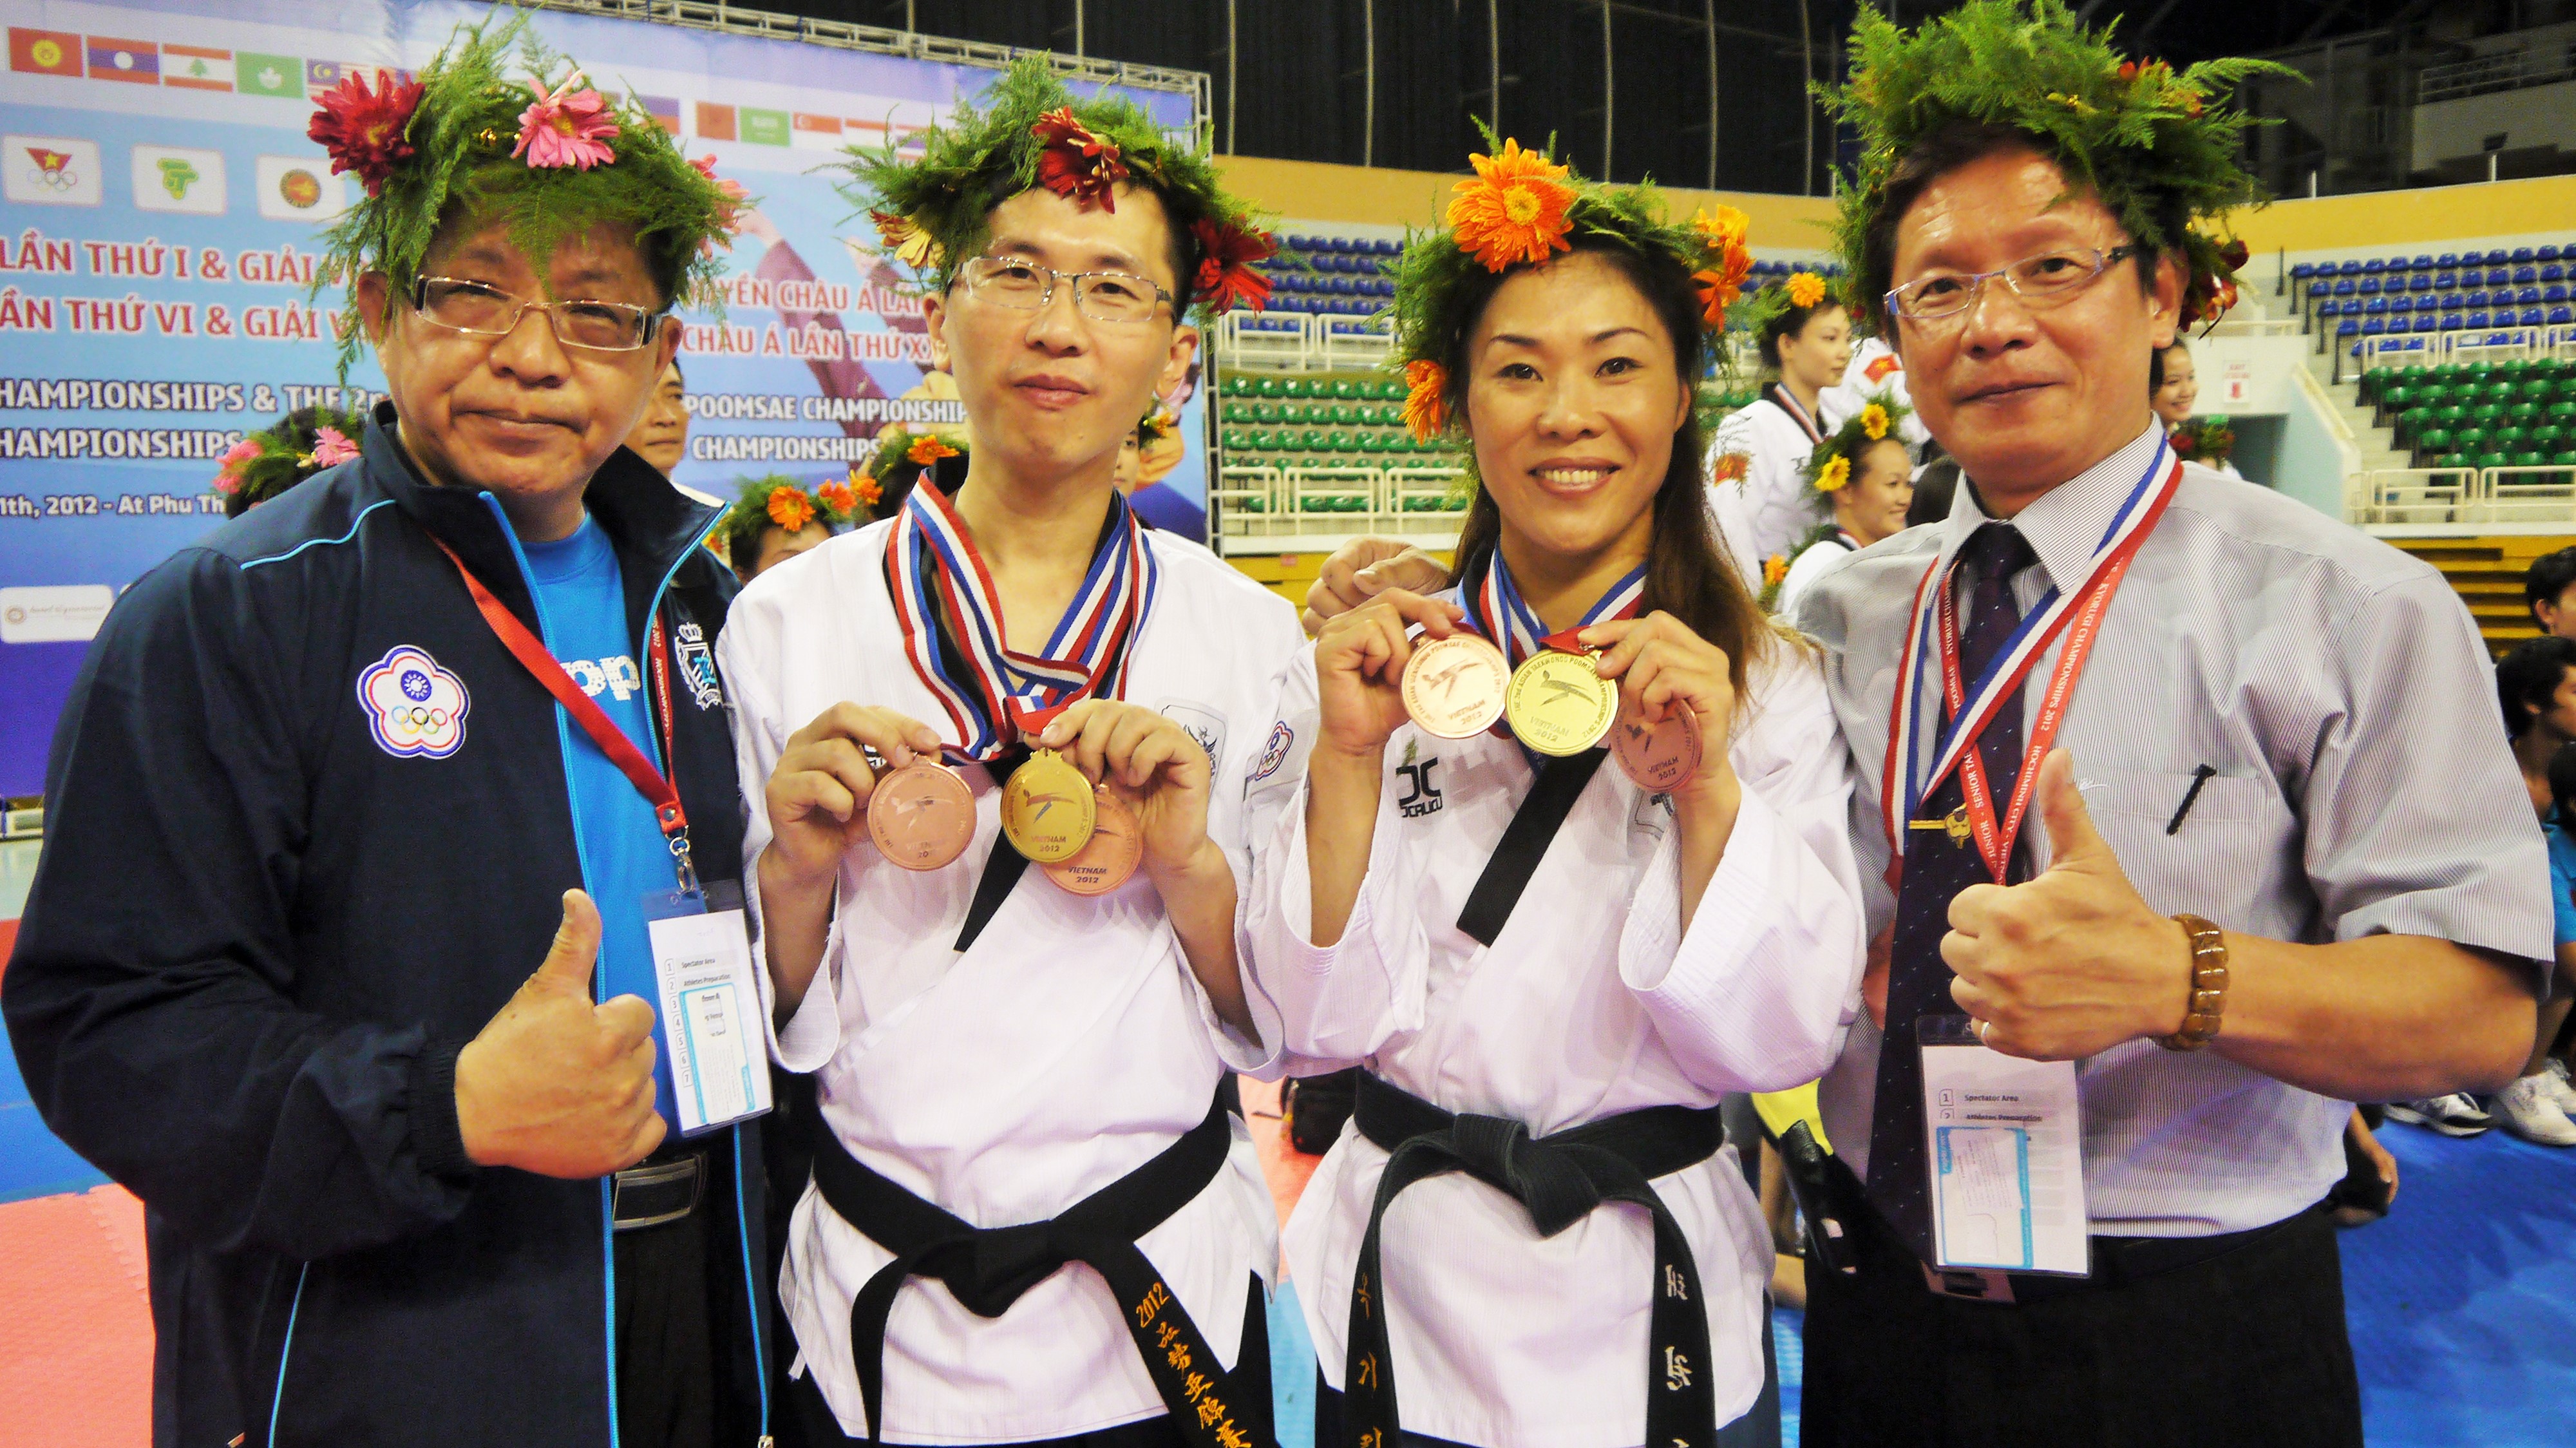 http://www.ystkd.tw/smtkd/uploads/tadgallery//73_P1030962.JPG 2012年亞洲跆拳道品勢錦標賽(越南)